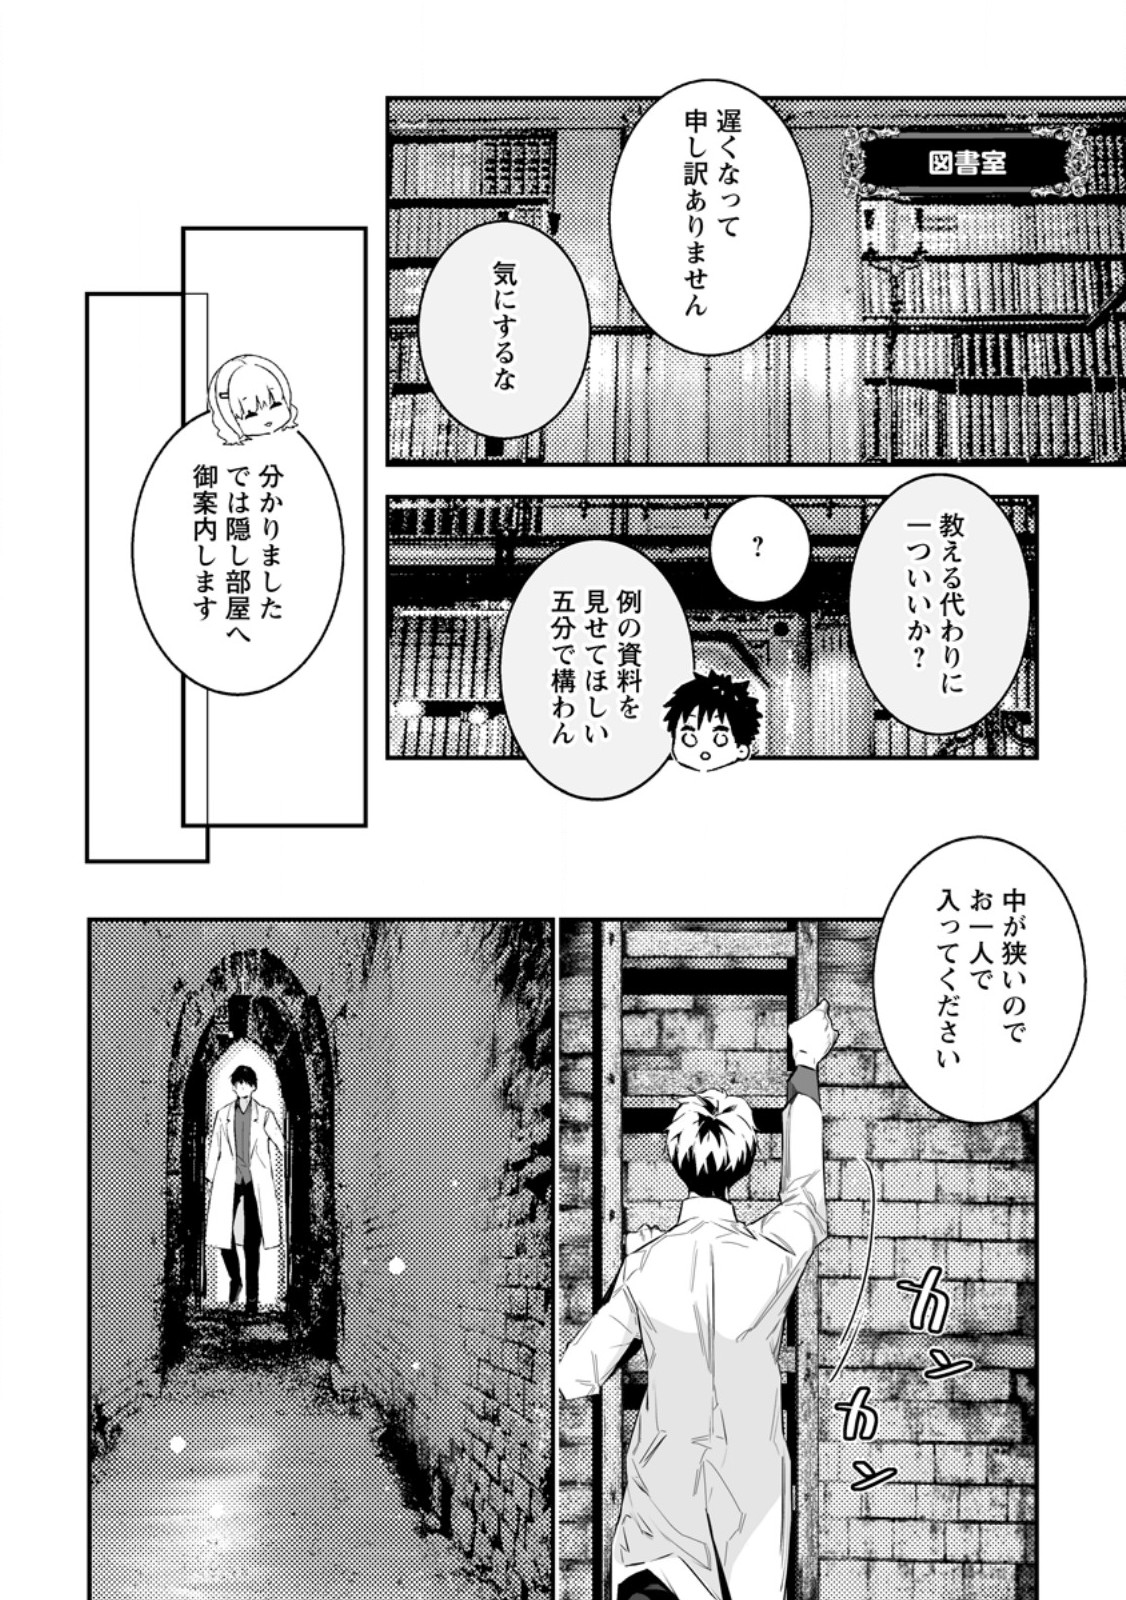 Hakui no Eiyuu - Chapter 33.2 - Page 2